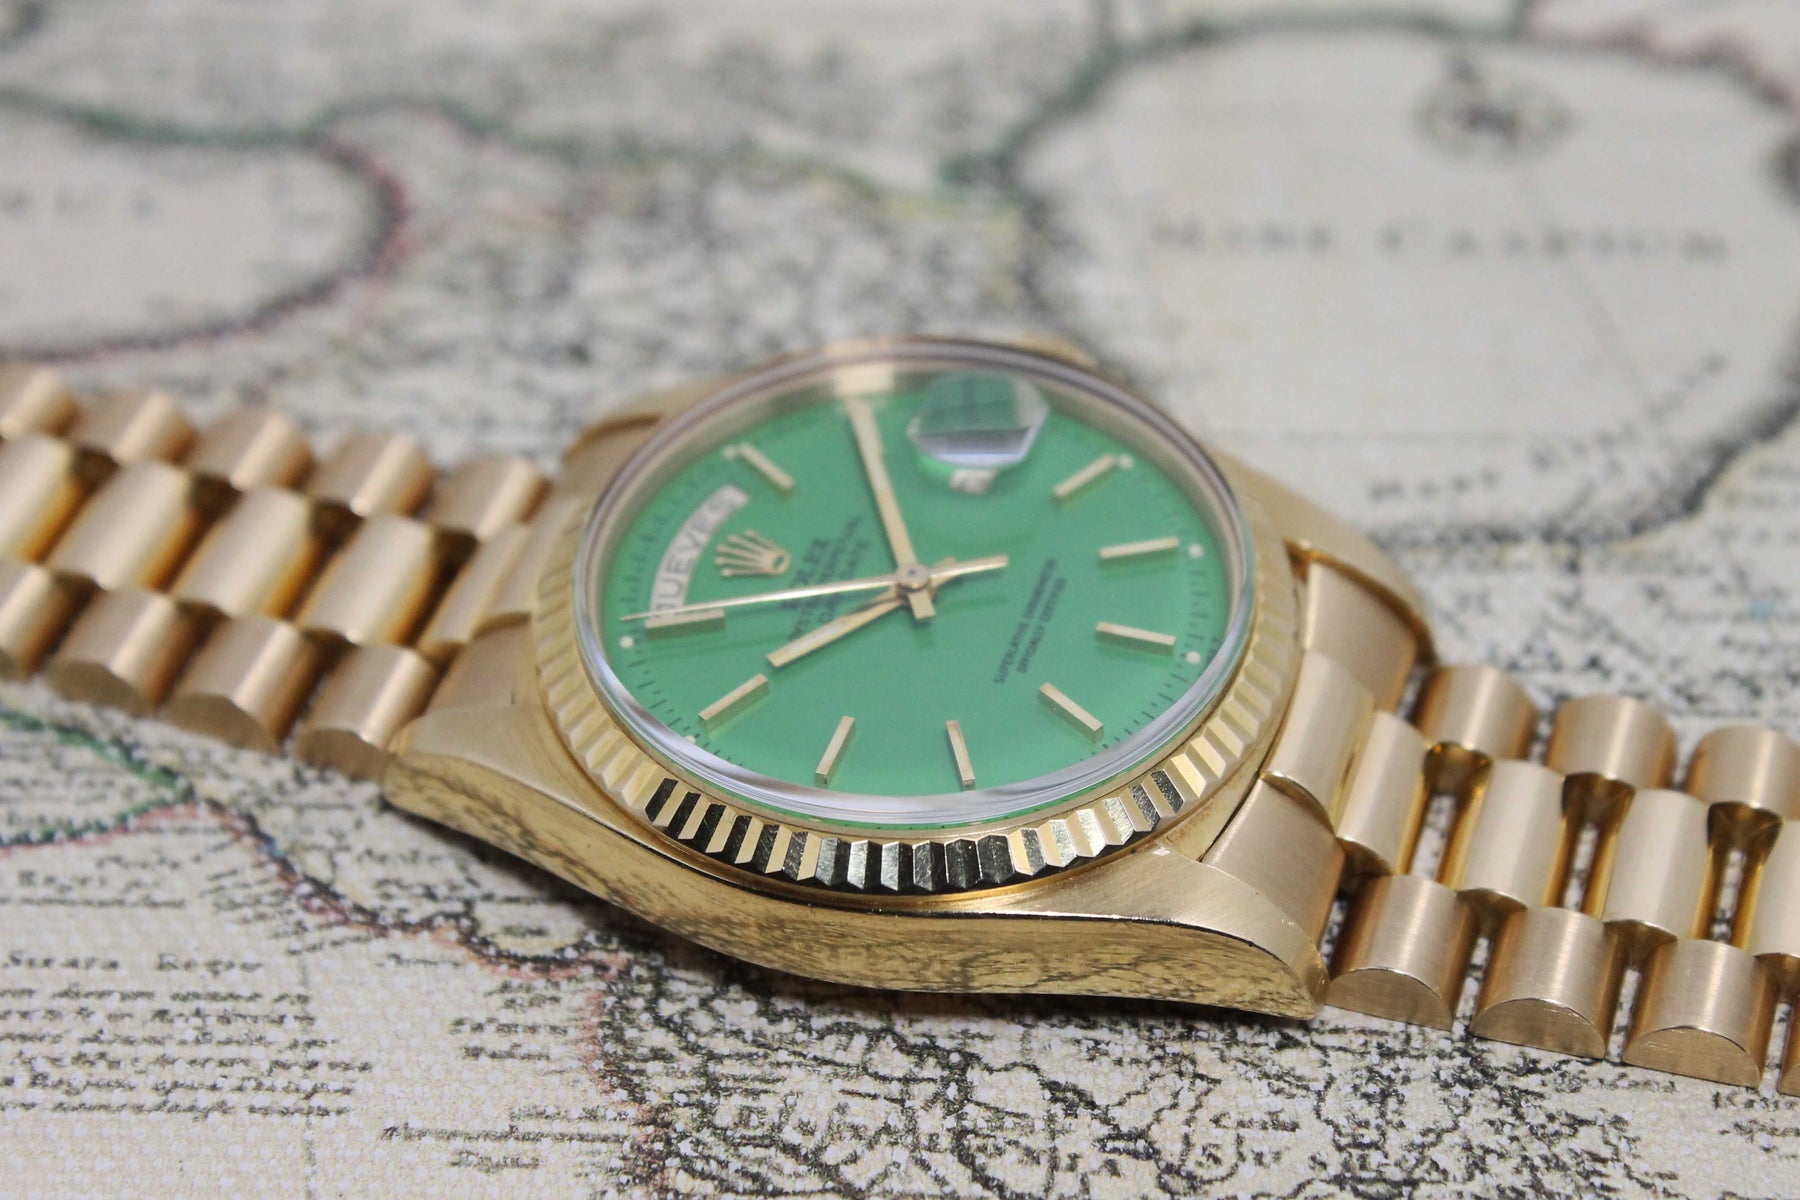 1978 Rolex Day Date Green Stella Dial Ref. 1803